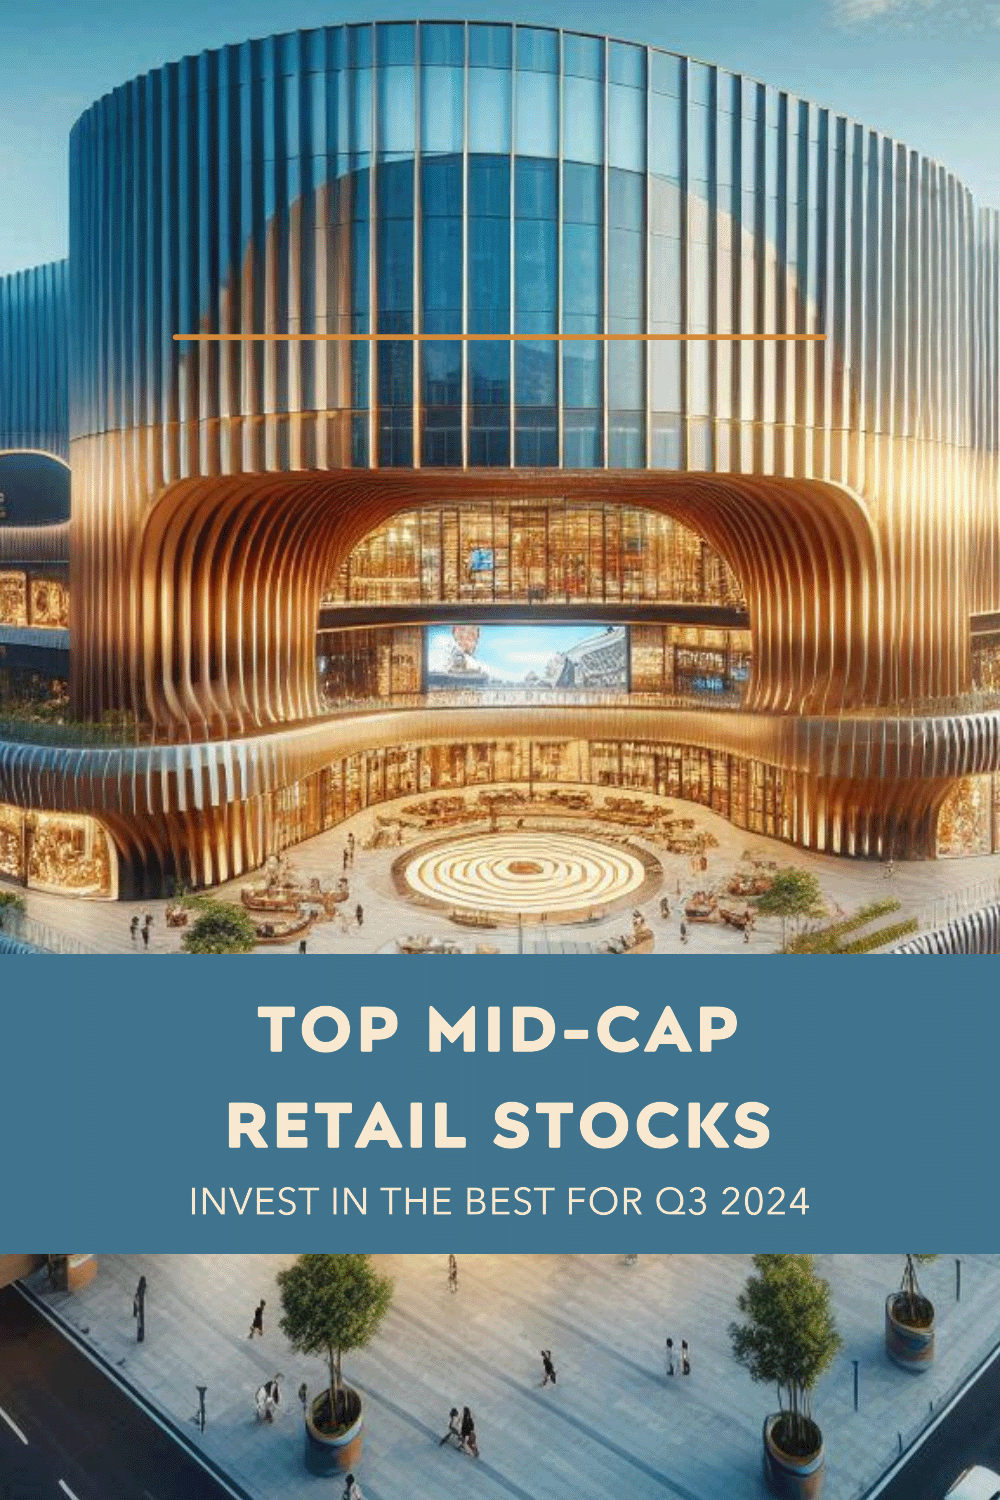 Best mid-cap retail stocks to invest in Q3 2024